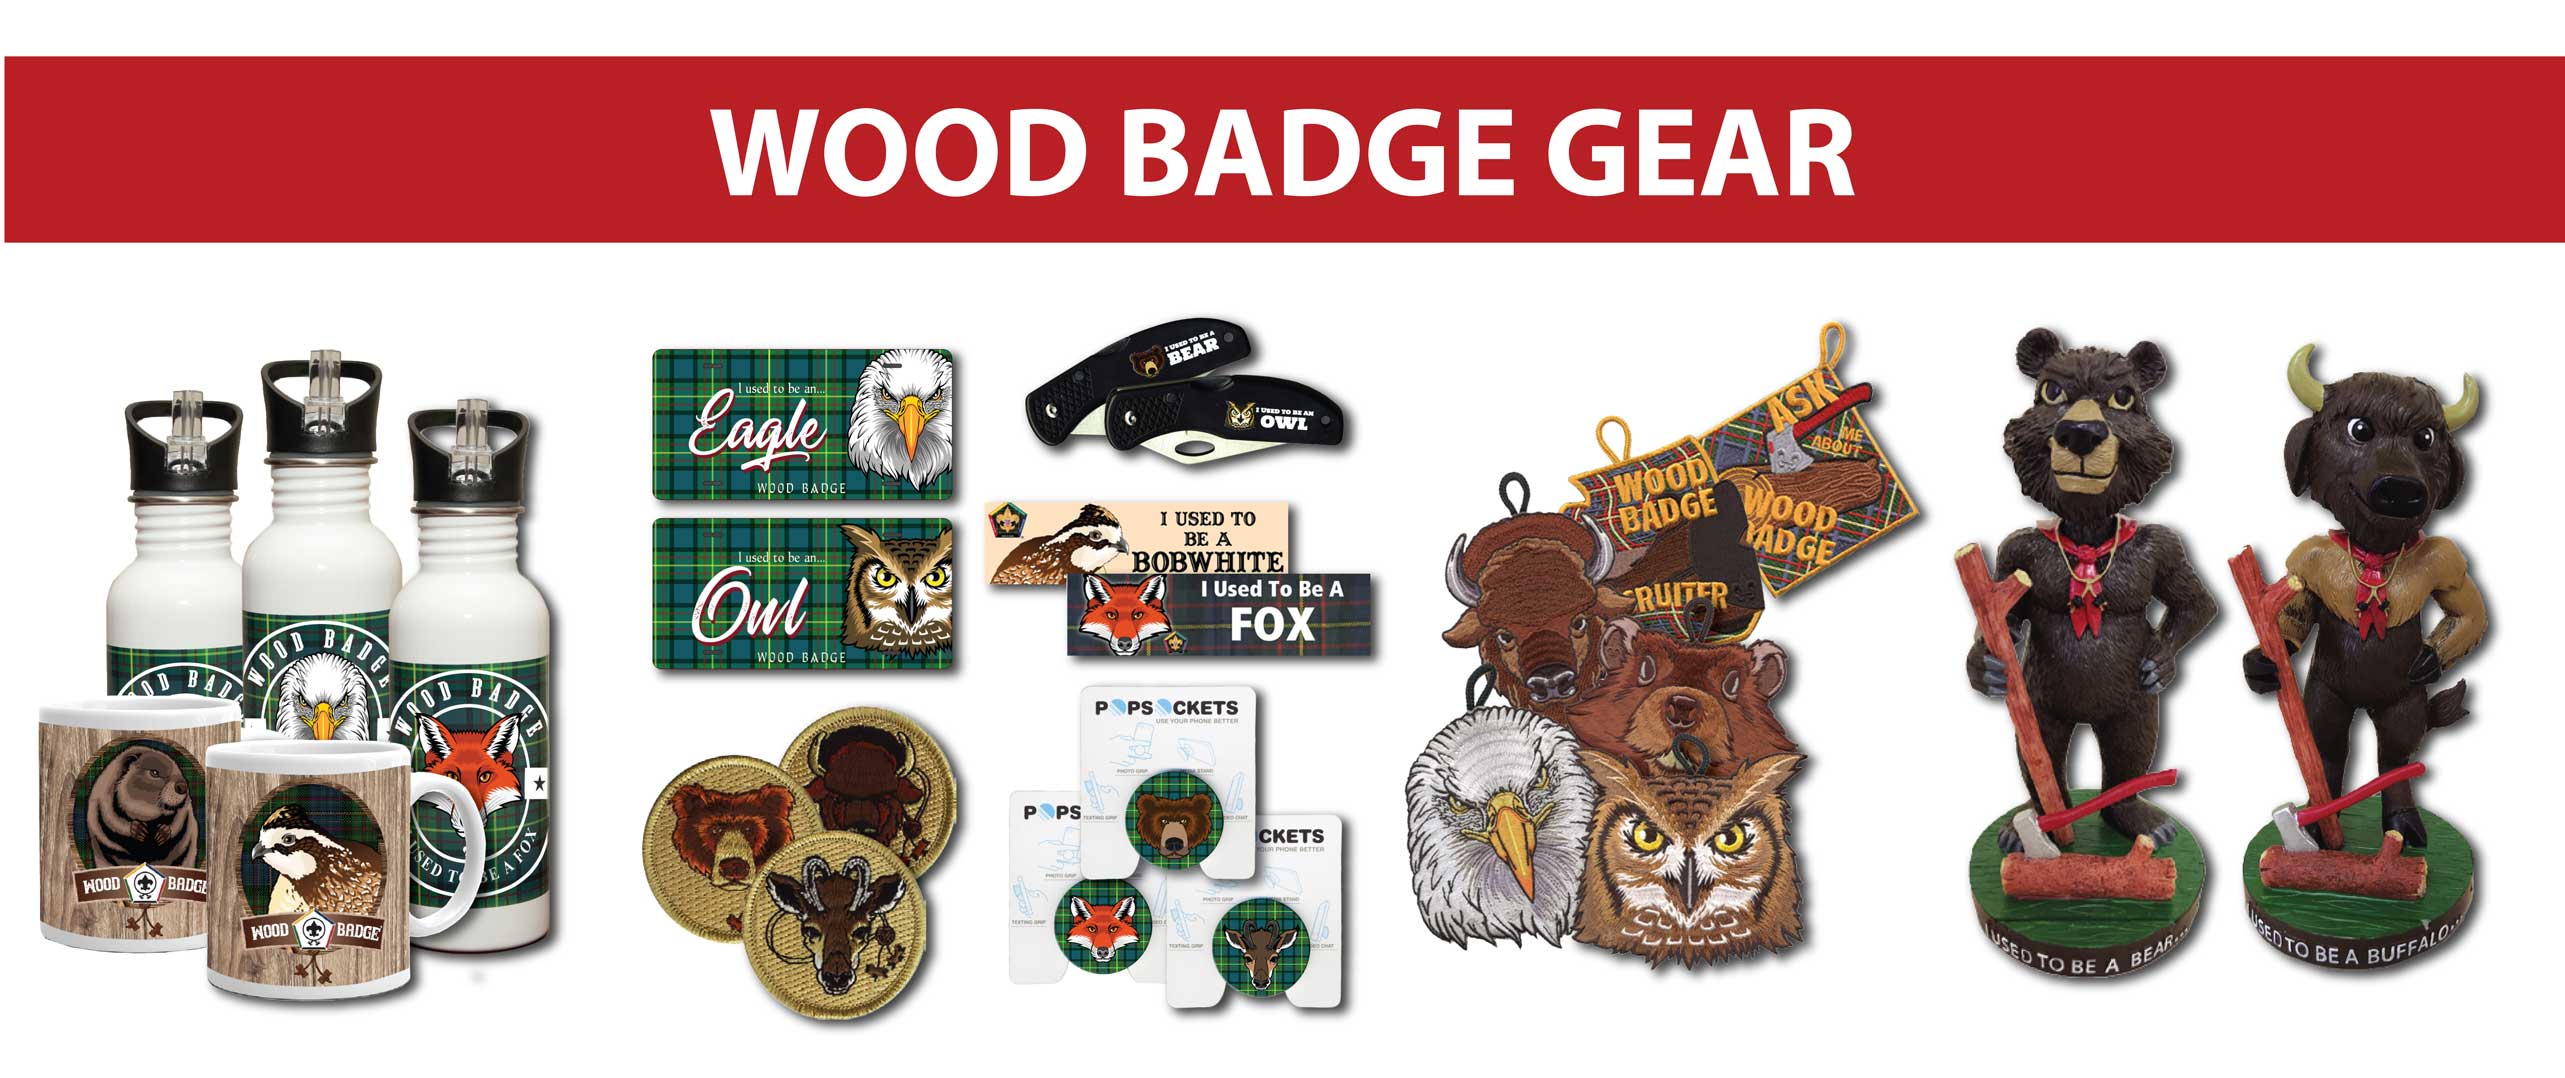 https://cdn11.bigcommerce.com/s-tvu0xuc8/images/stencil/original/carousel/20/tradingpost-header-woodb-badge-gear.jpg?c=2